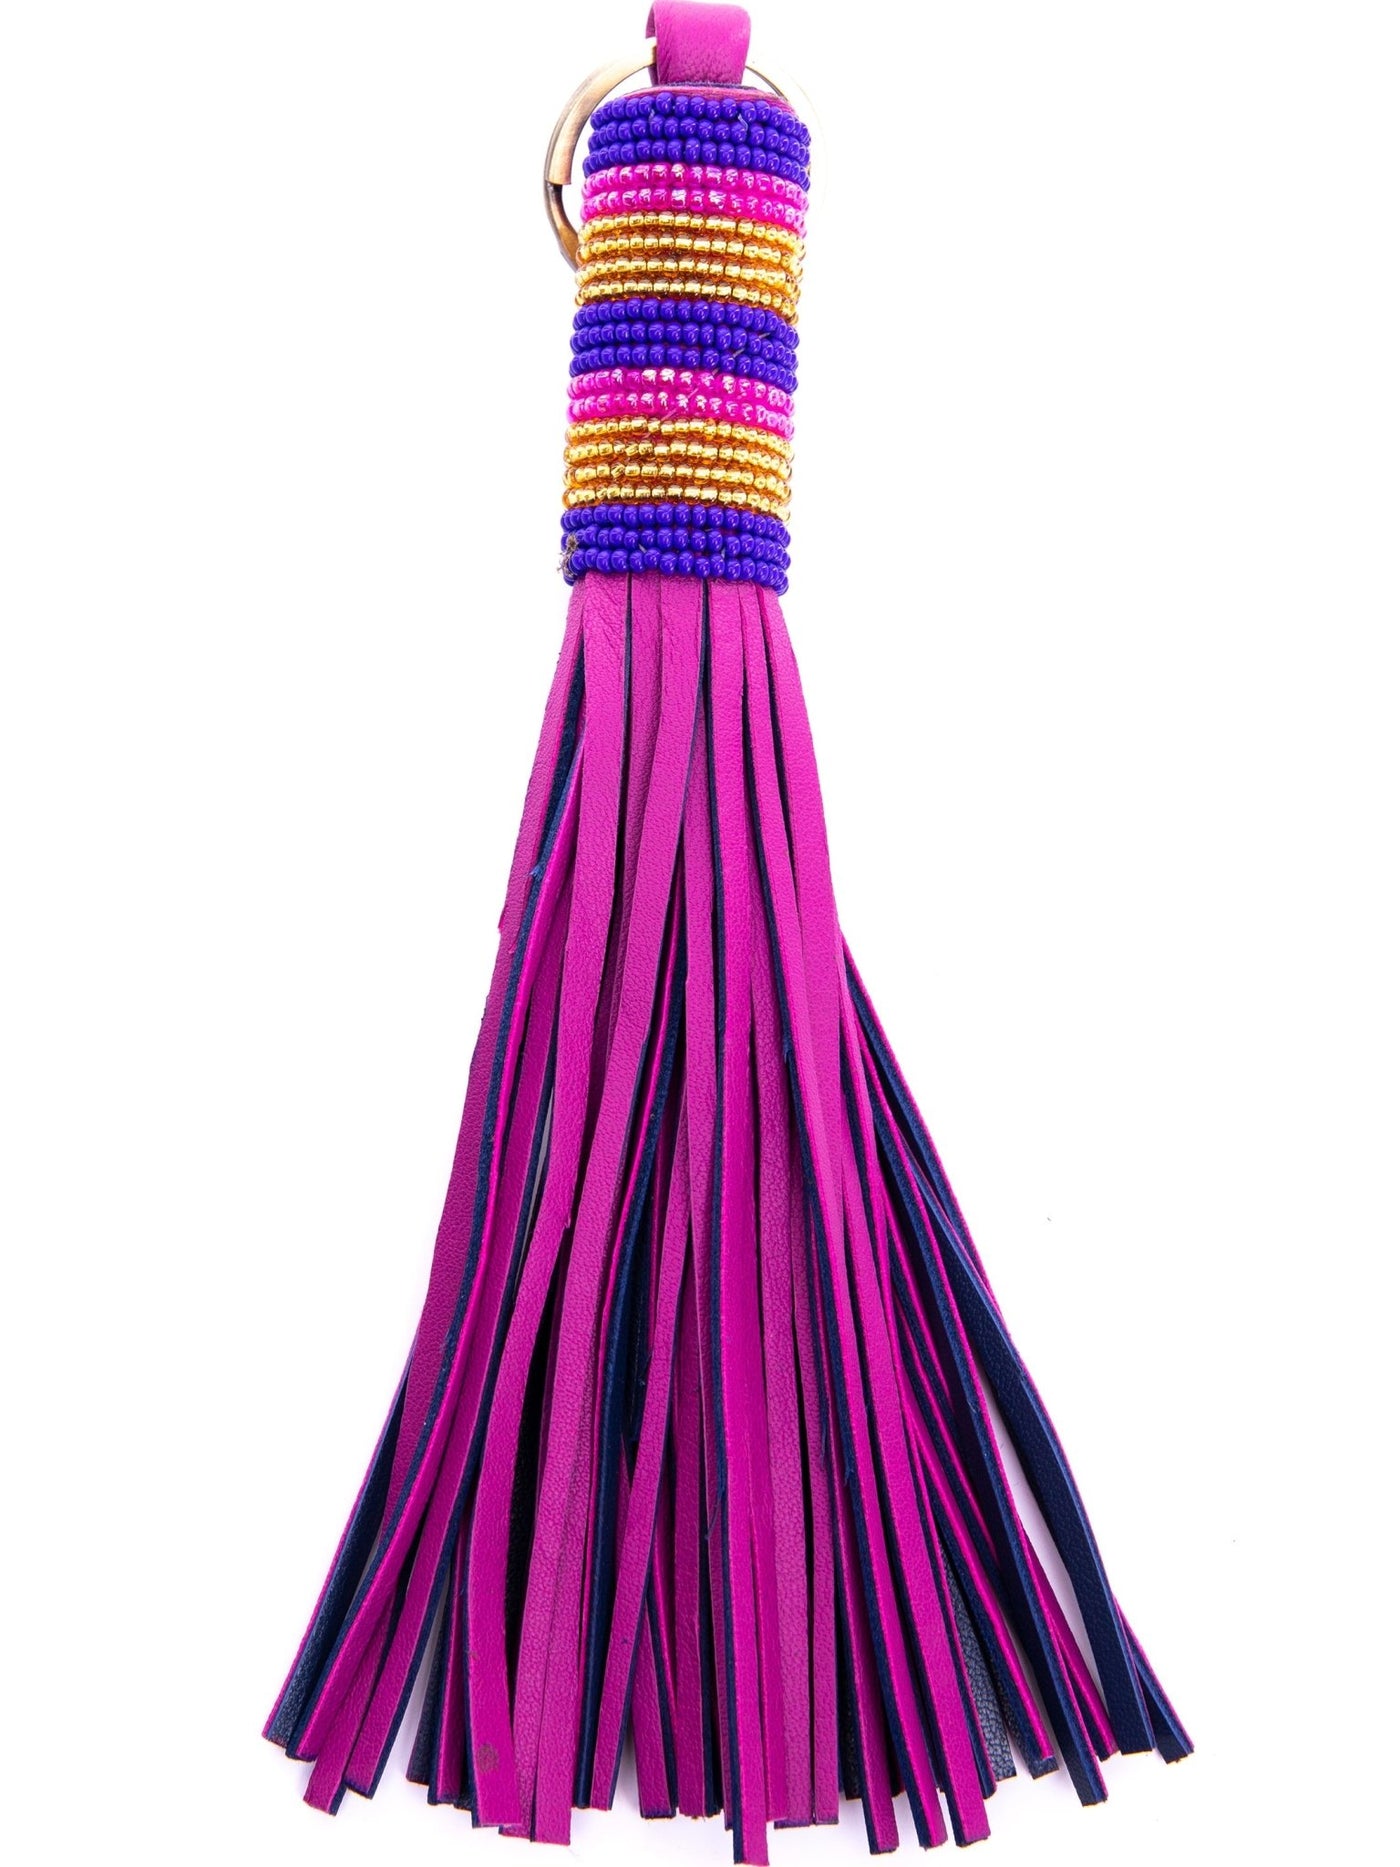 Azu Handbag Tassels - Purple - Shop Zetu Kenya